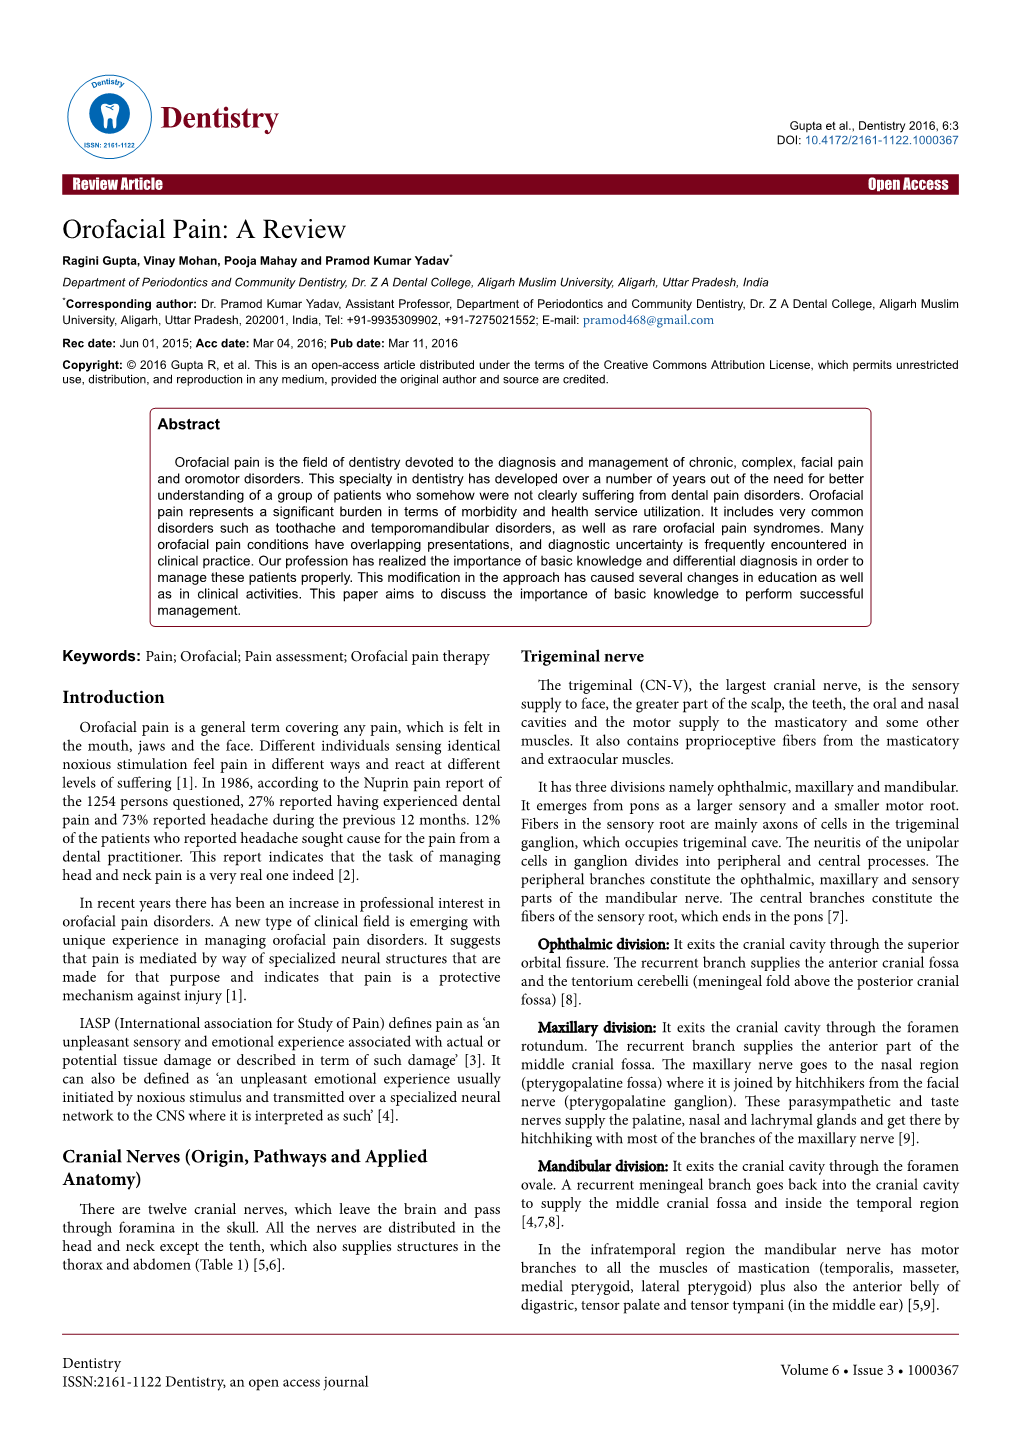 Orofacial Pain: a Review Ragini Gupta, Vinay Mohan, Pooja Mahay and Pramod Kumar Yadav* Department of Periodontics and Community Dentistry, Dr